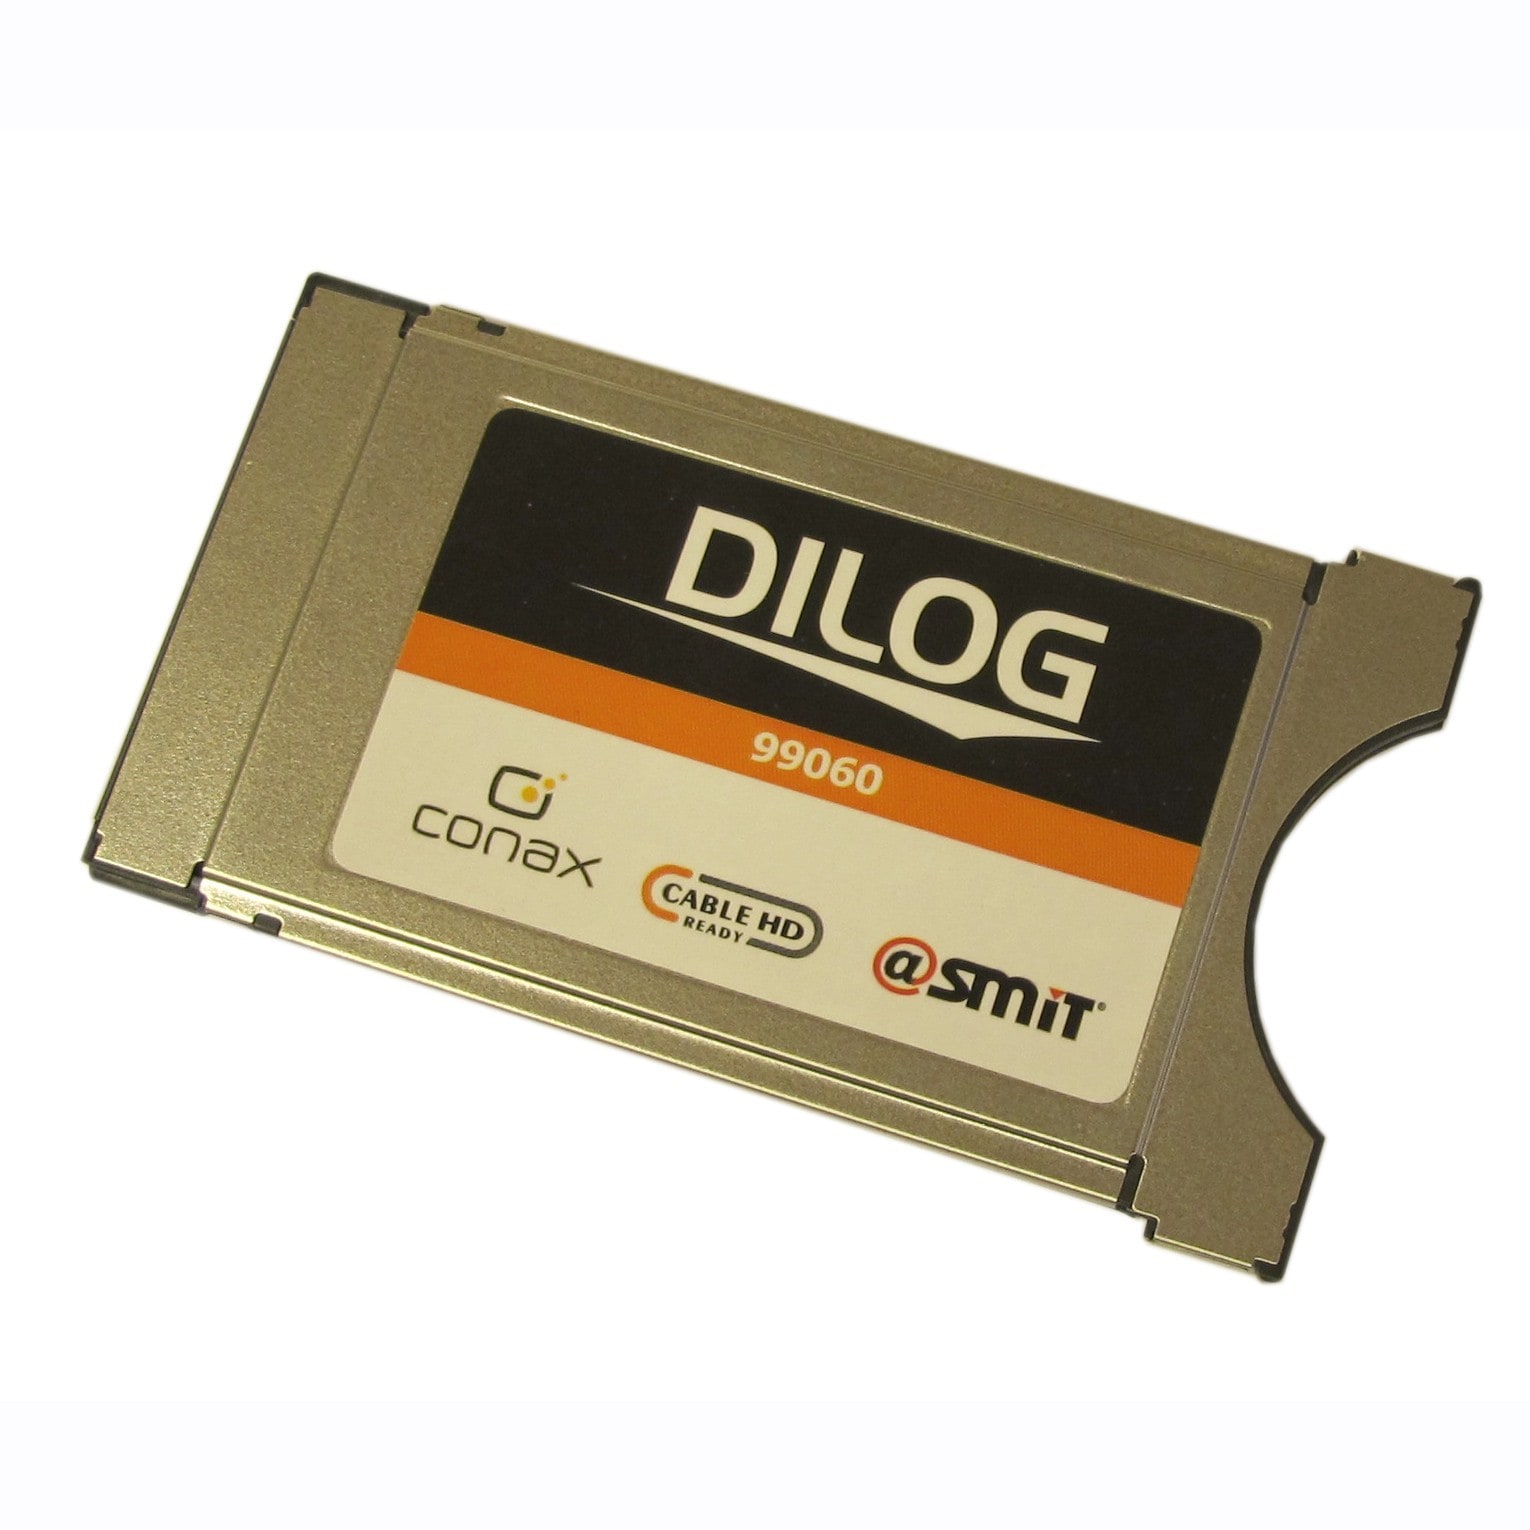 Dilog CI+/CA-moduuli maksu-tv-korteille - Gigantti verkkokauppa